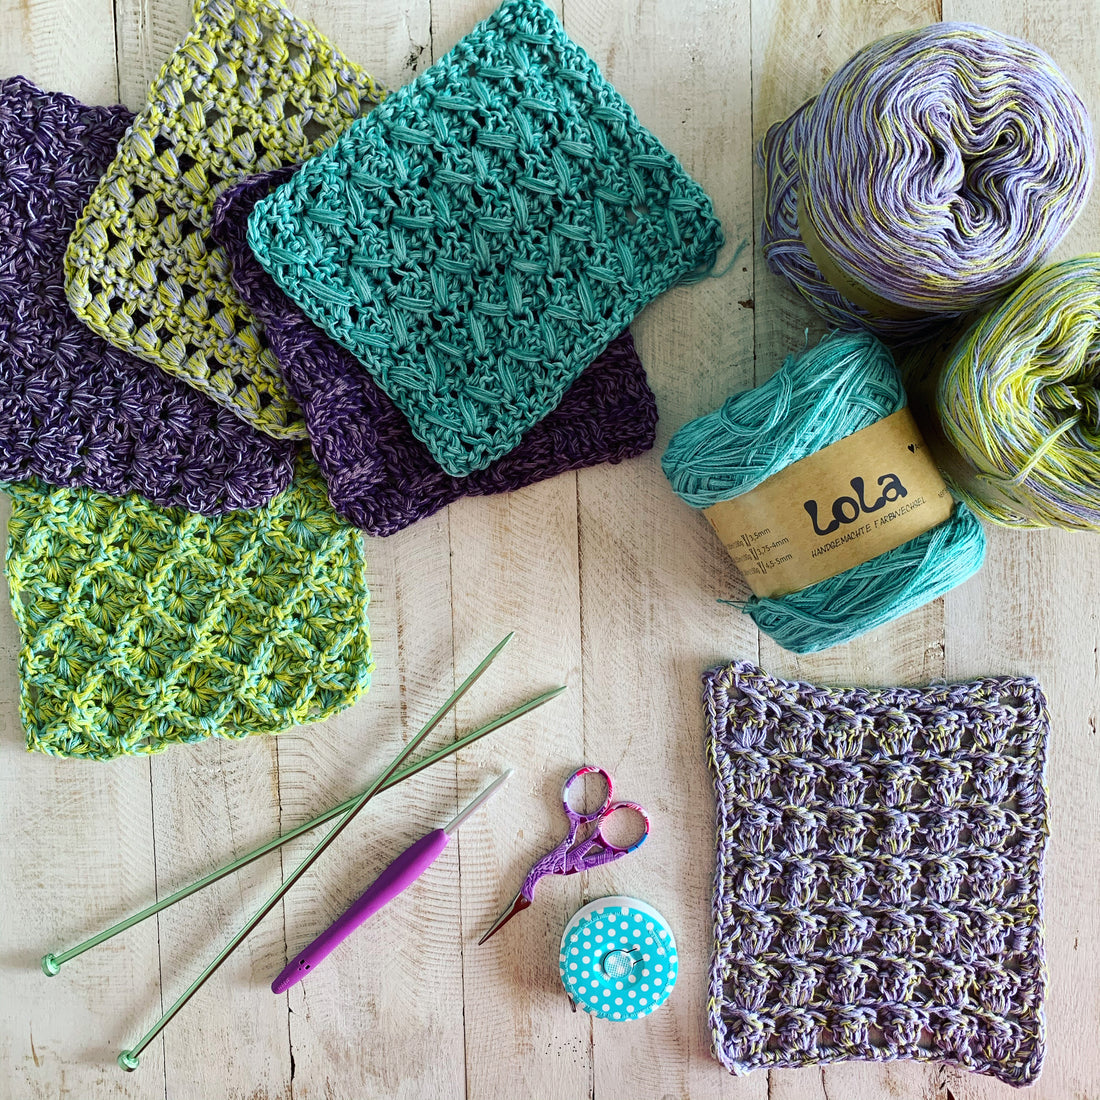 YMC Community Calming Corona Crochet & Knit Along Part Three!